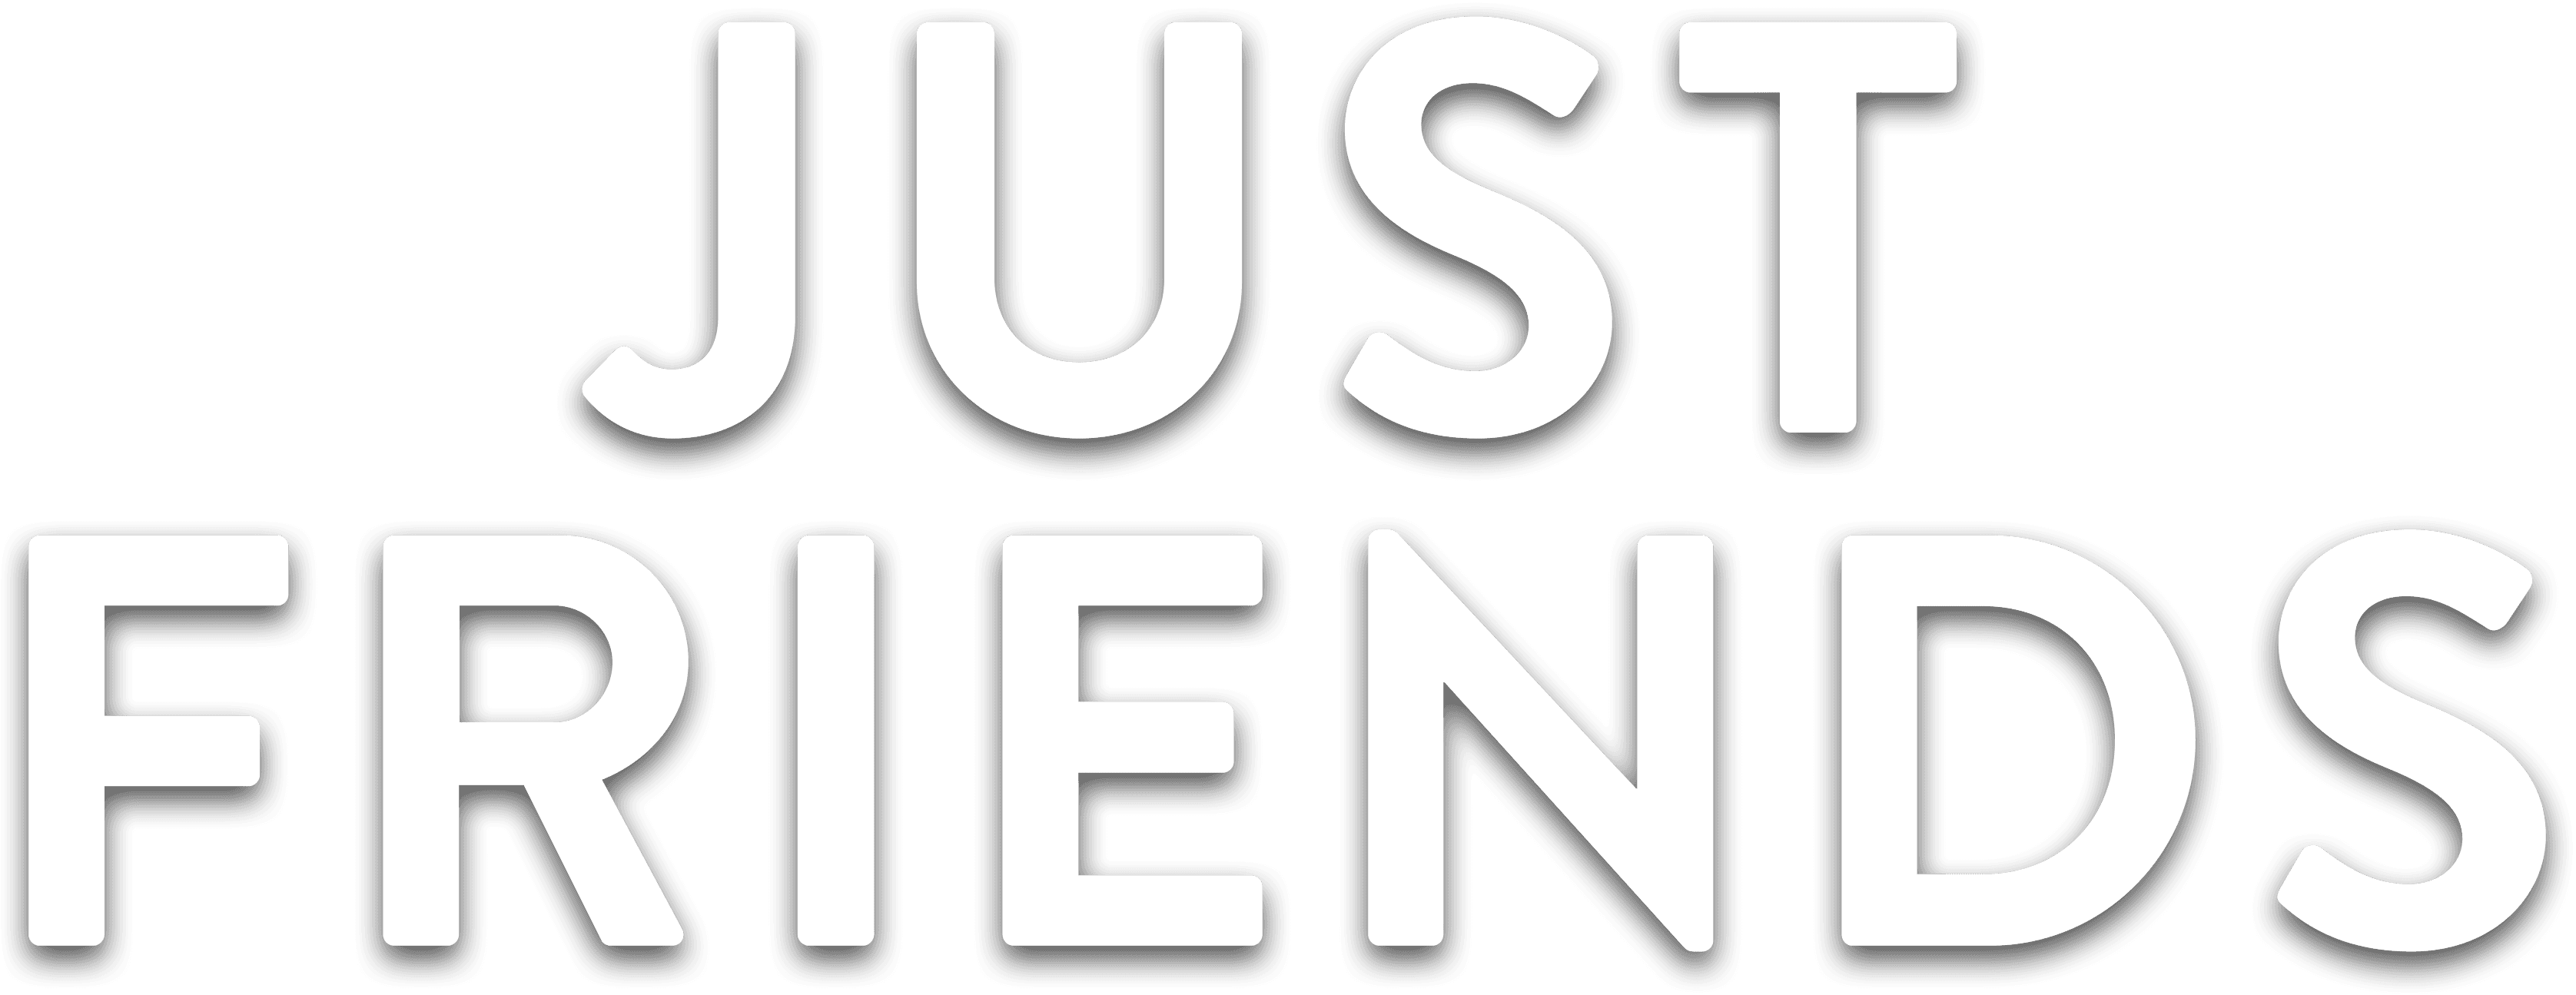 Just Friends logo